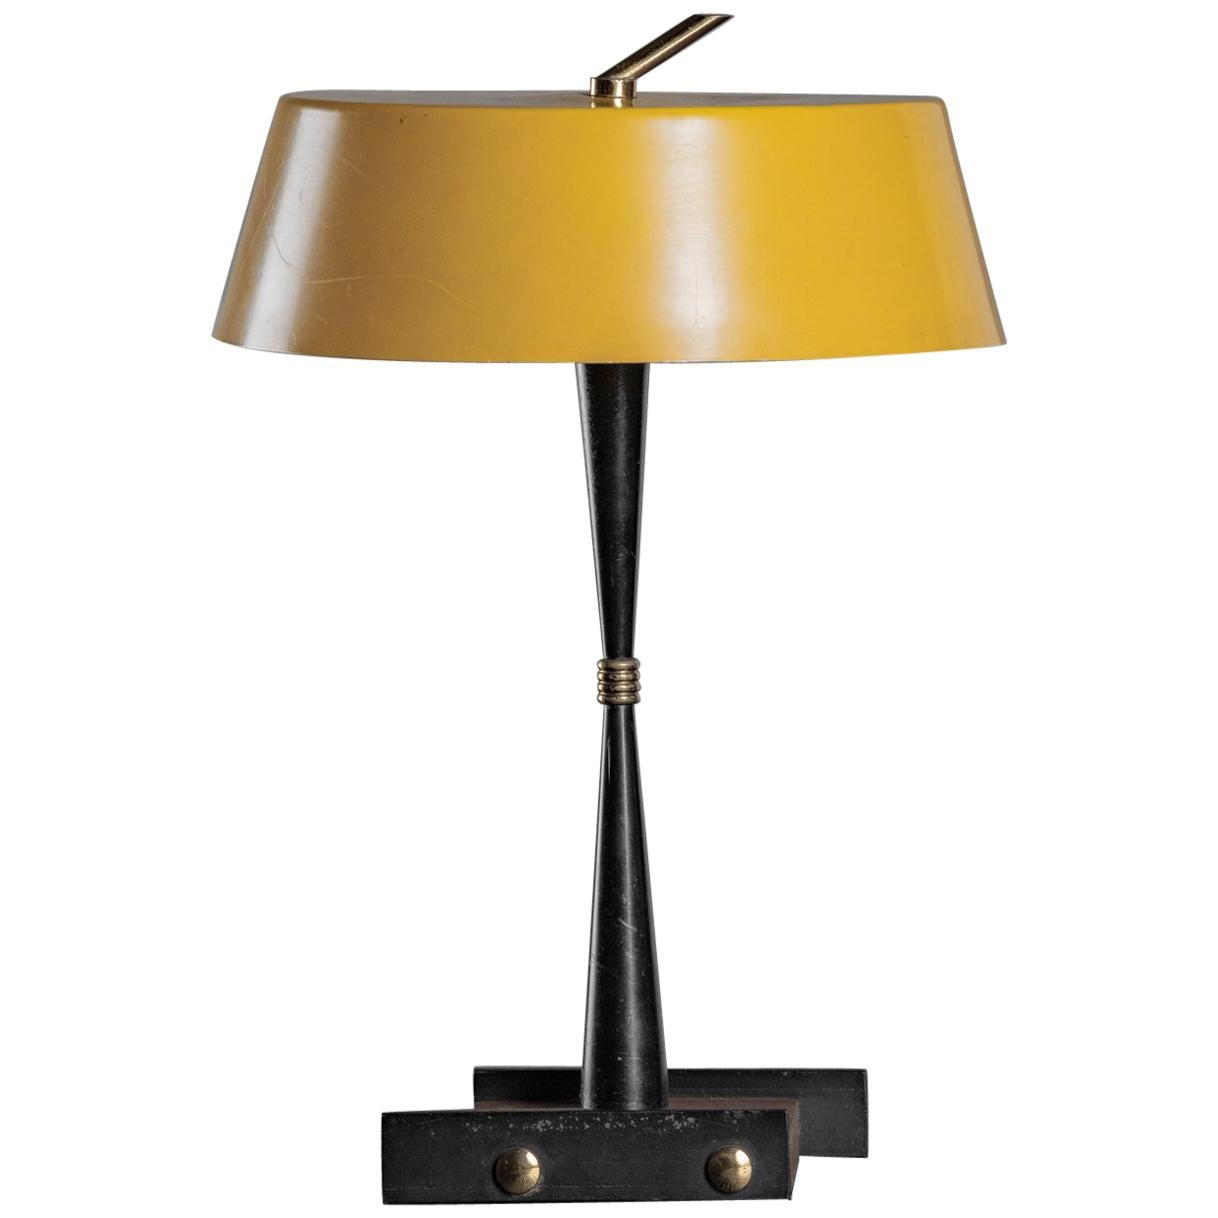 1950s Italian Metal and Wood Table Lamp